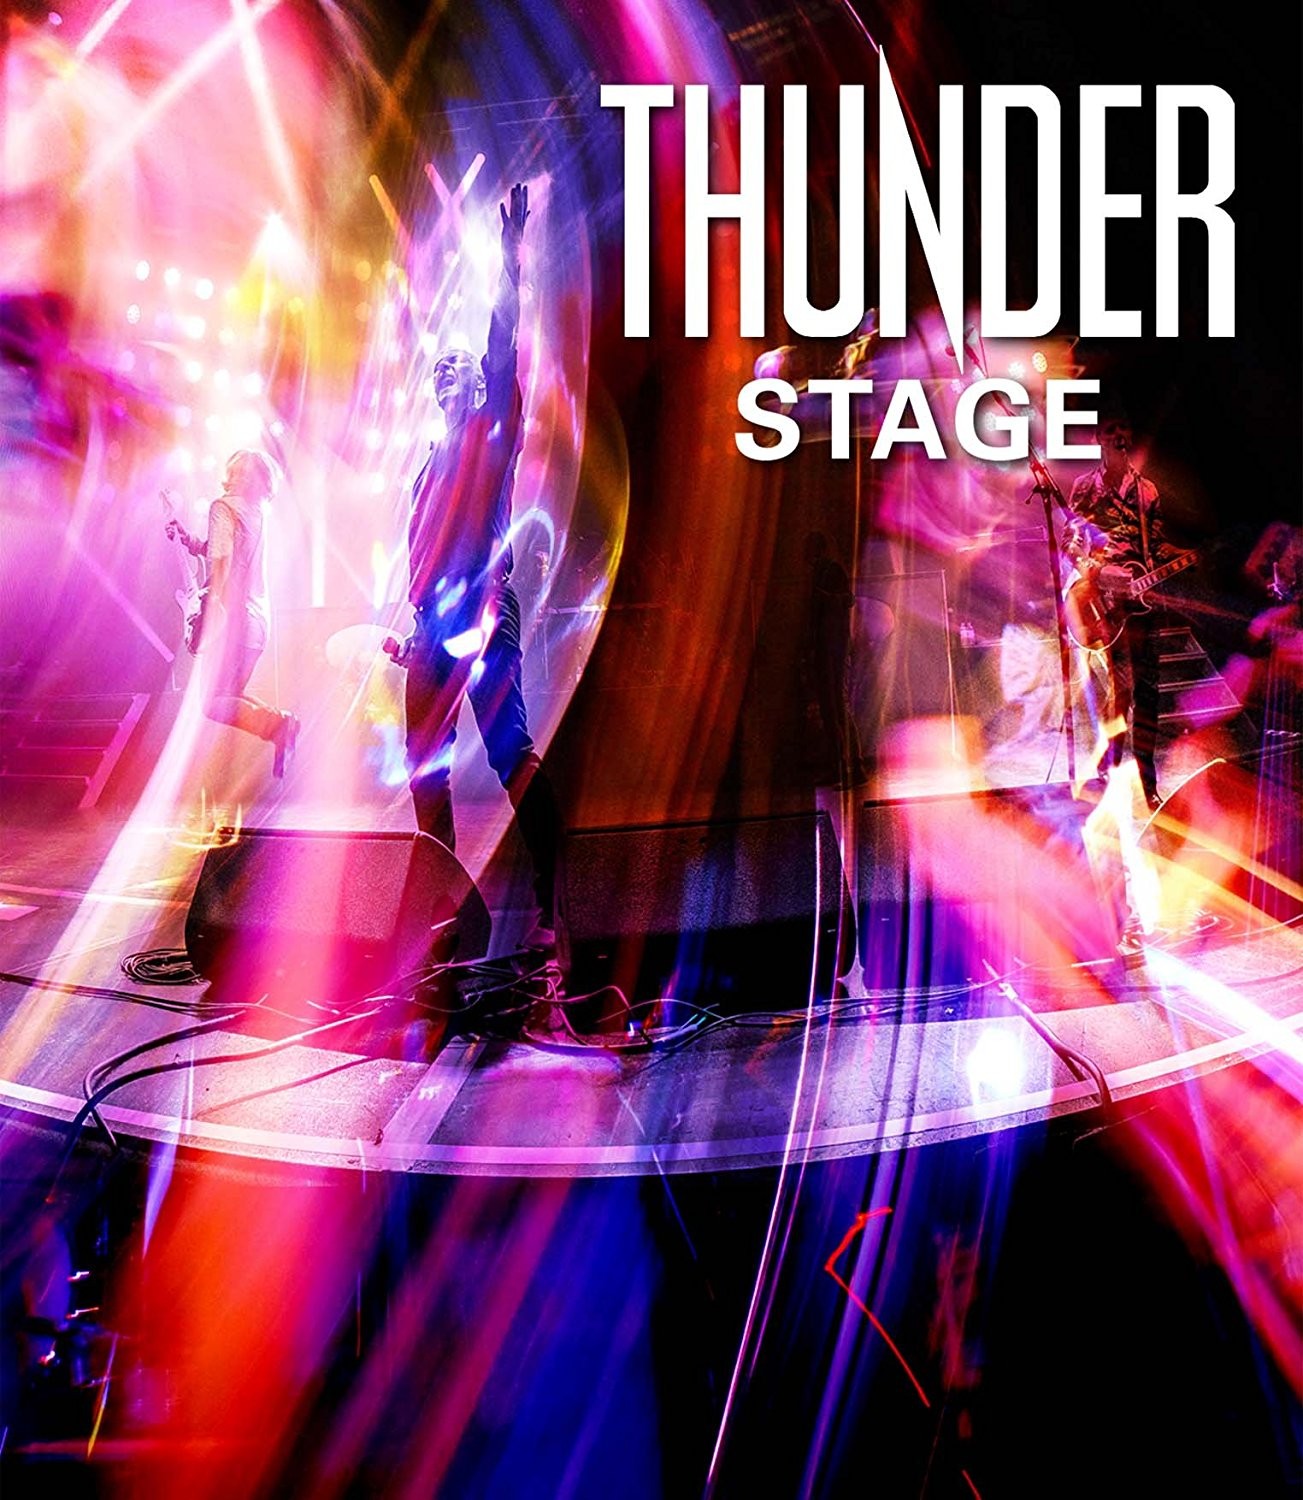 Thunder - Stage (Blu-ray, 2018)